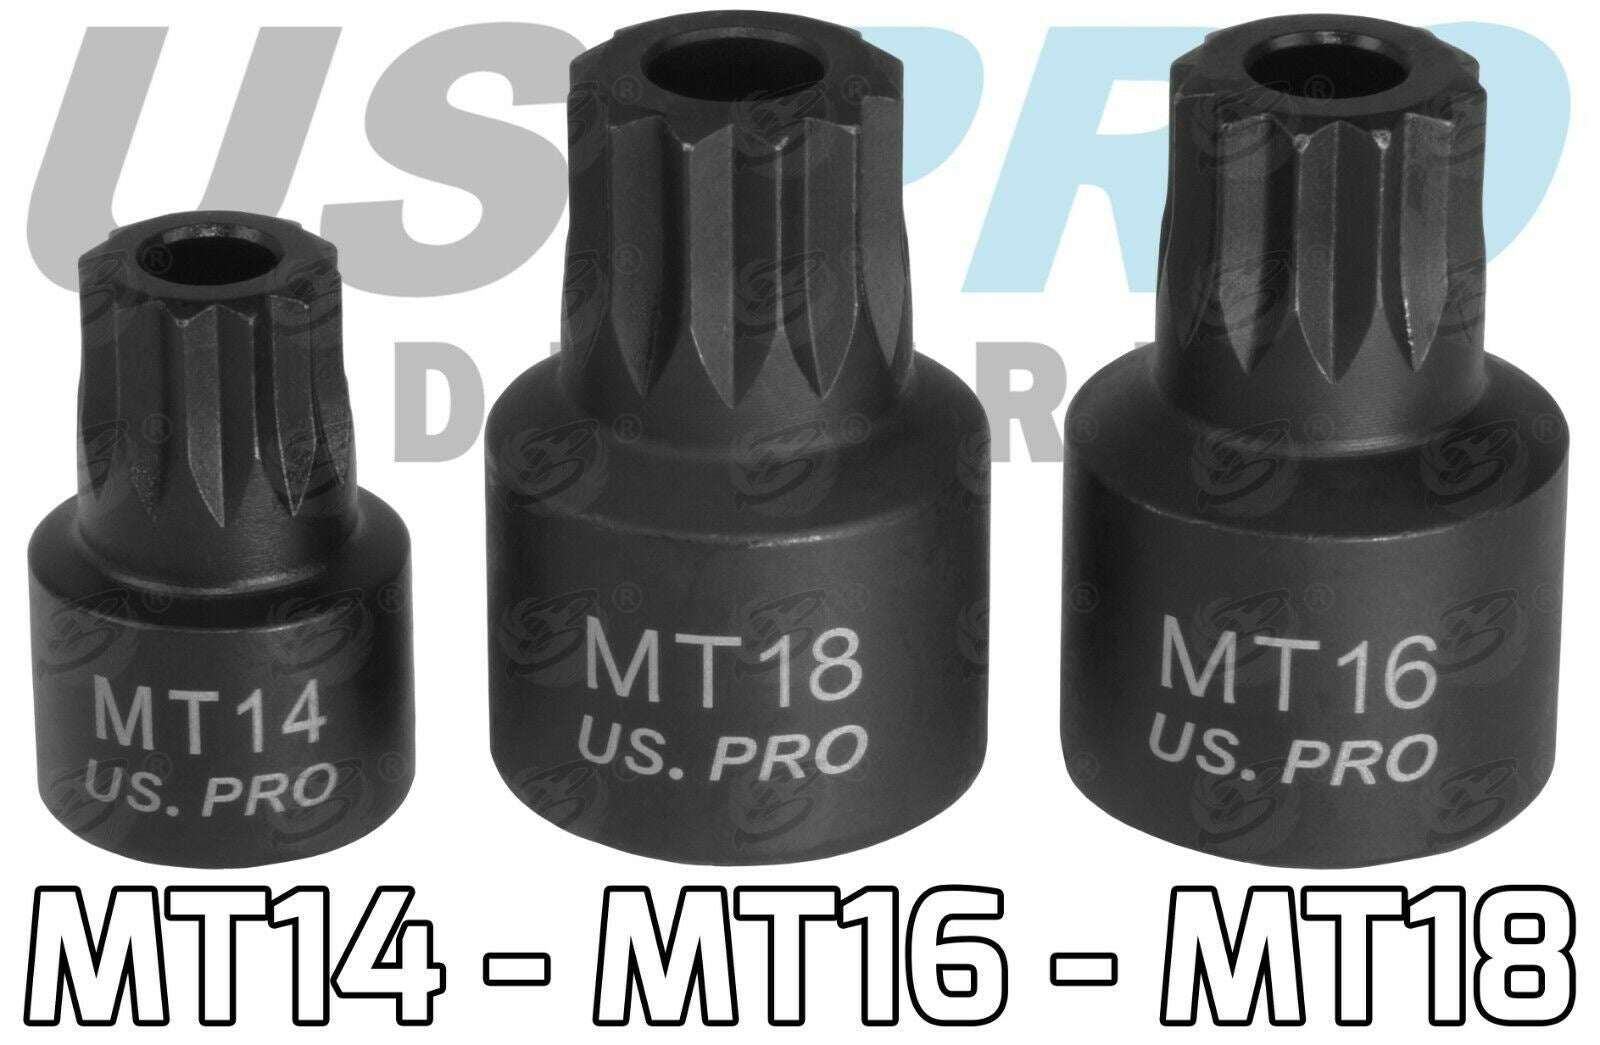 US PRO 9PCS 1/4" & 3/8" & 1/2" DRIVE STUBBY IMPACT SPLINE BIT SOCKETS M4 - M18